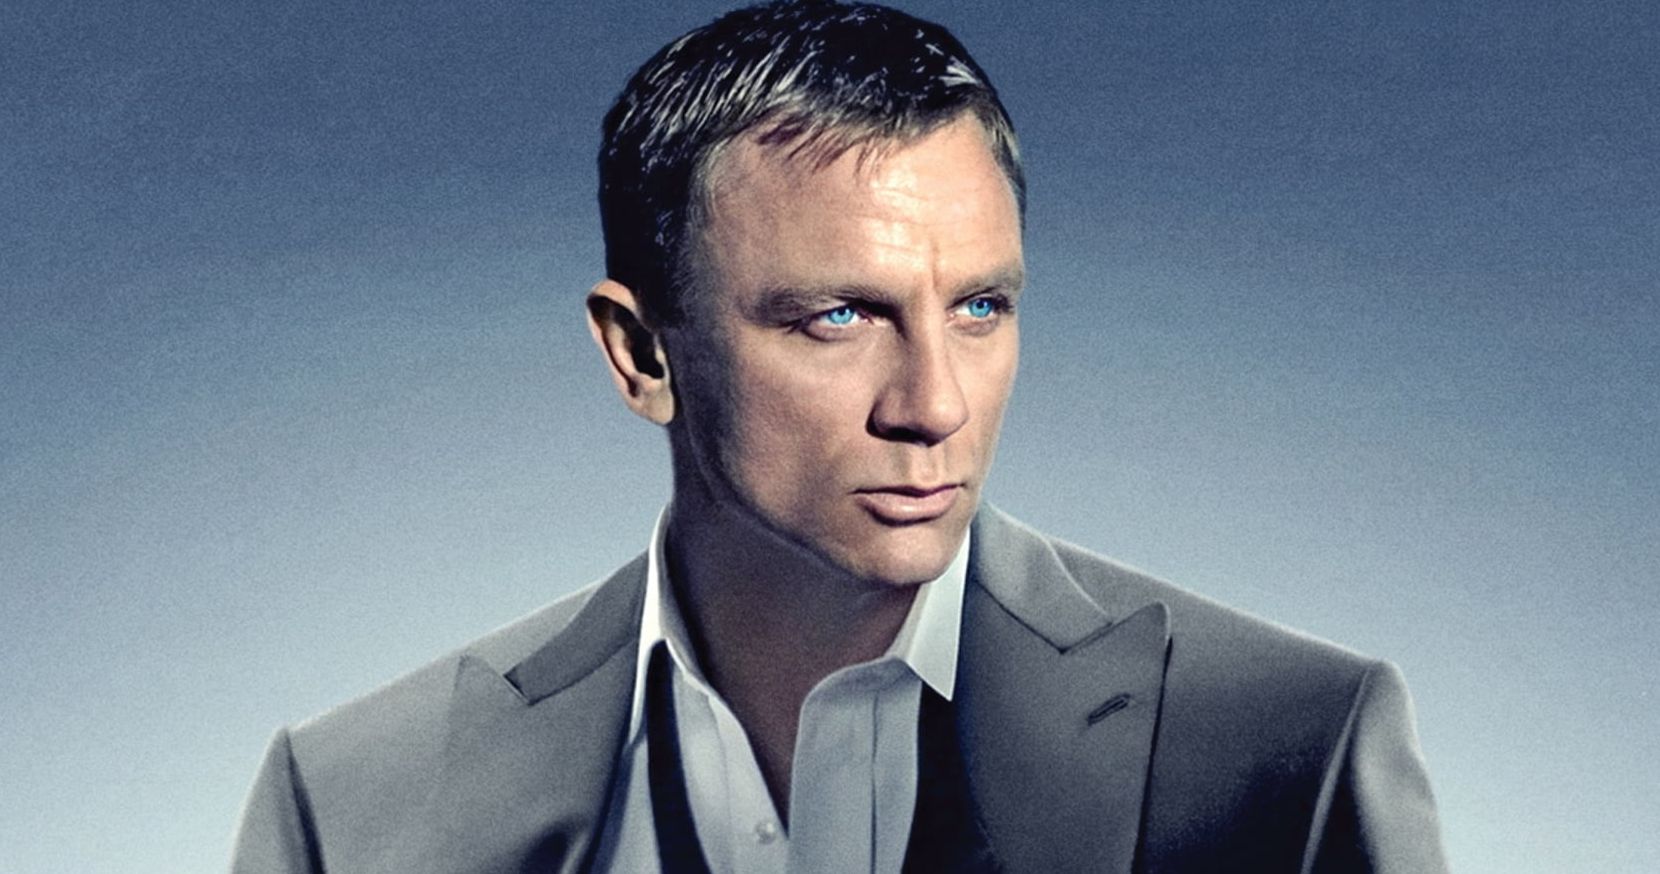 Is James Bond Better Off Without Daniel Craig?